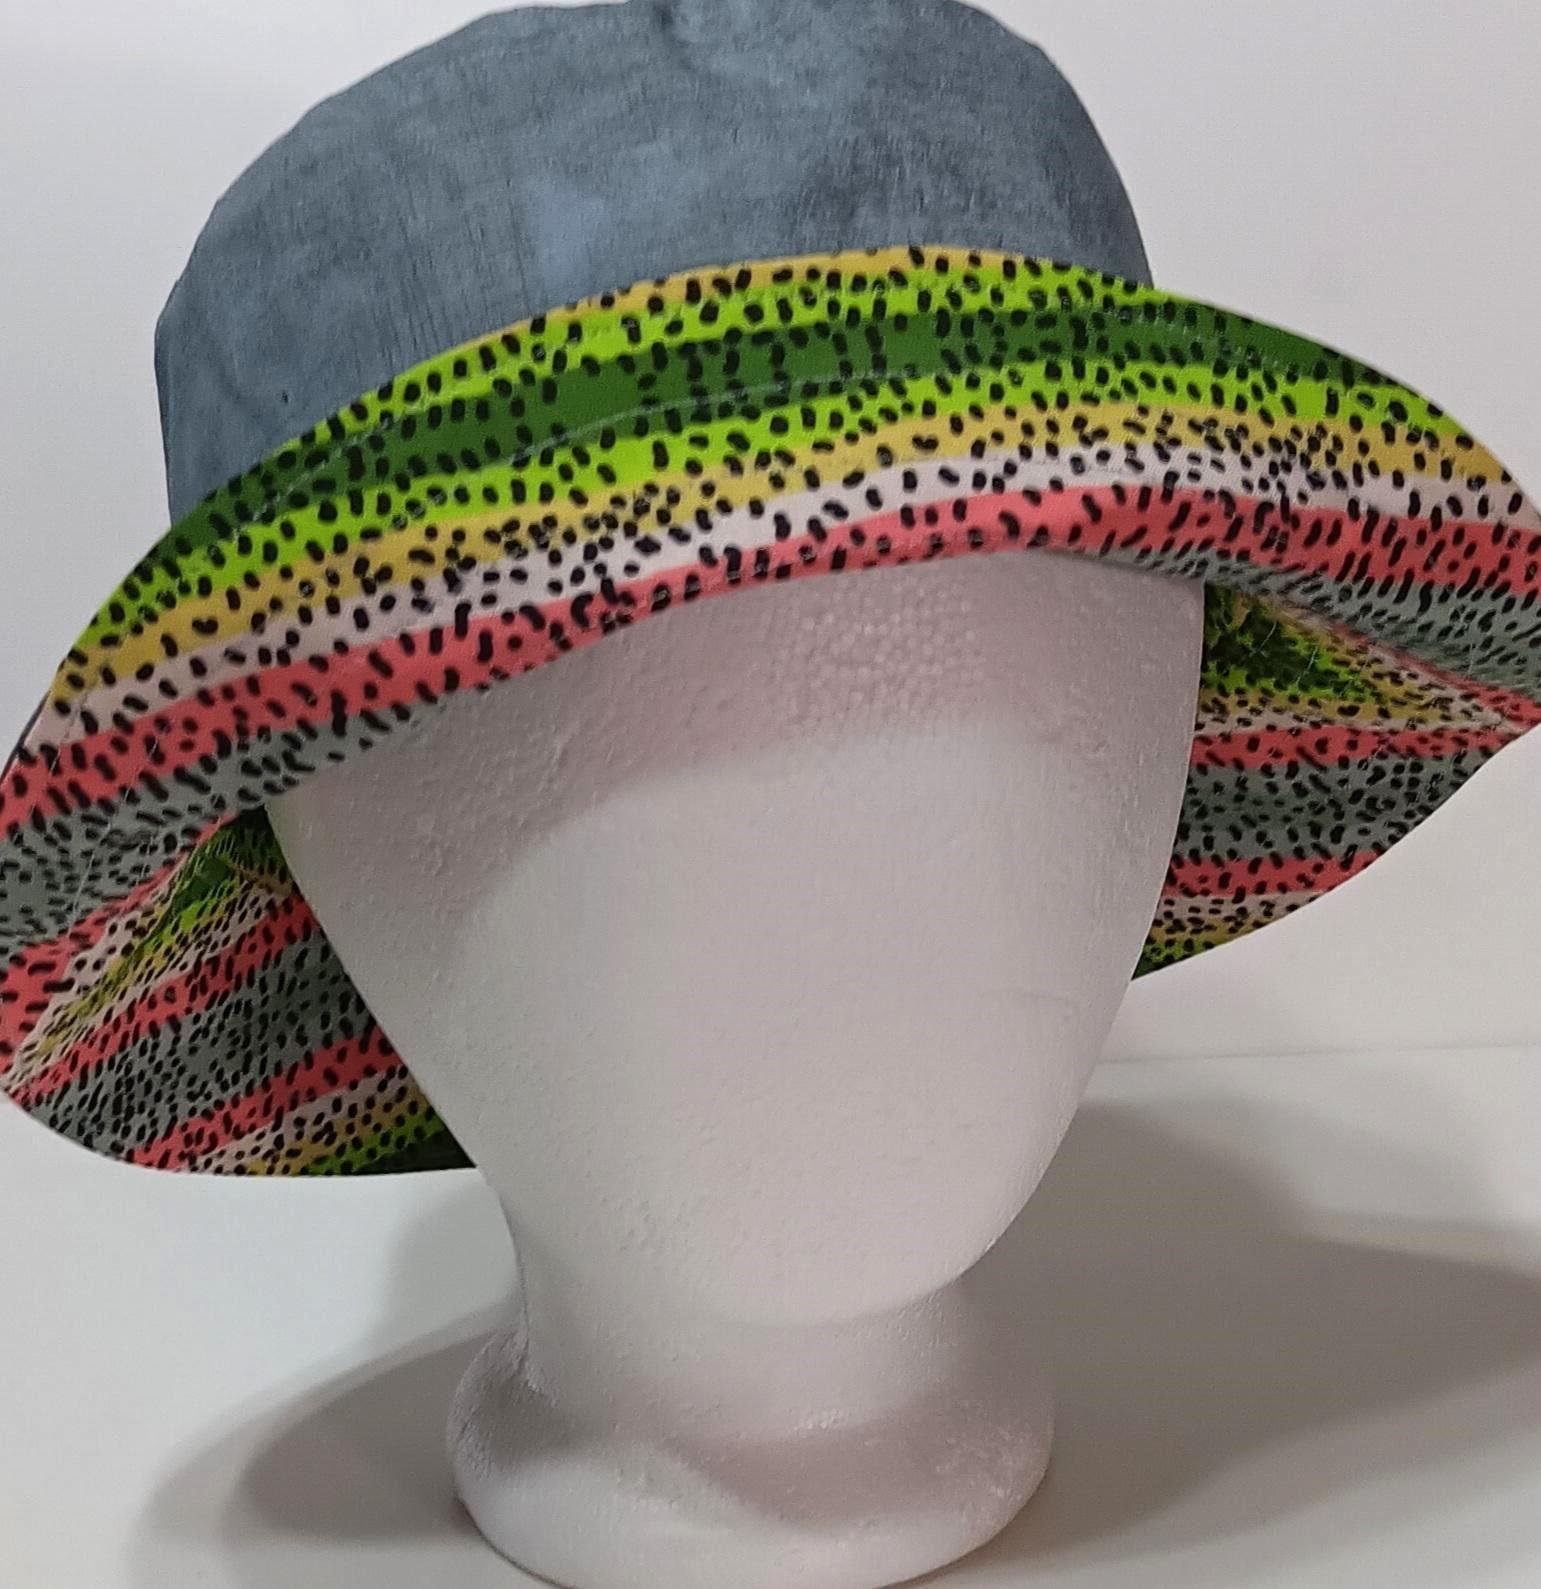 Trout Fishing Theme Bucket Hat, Fly Fishing, Reversible, Sizes S-XXL, summer hat, fishing hat, ponytail hat, sun hat, floppy hat